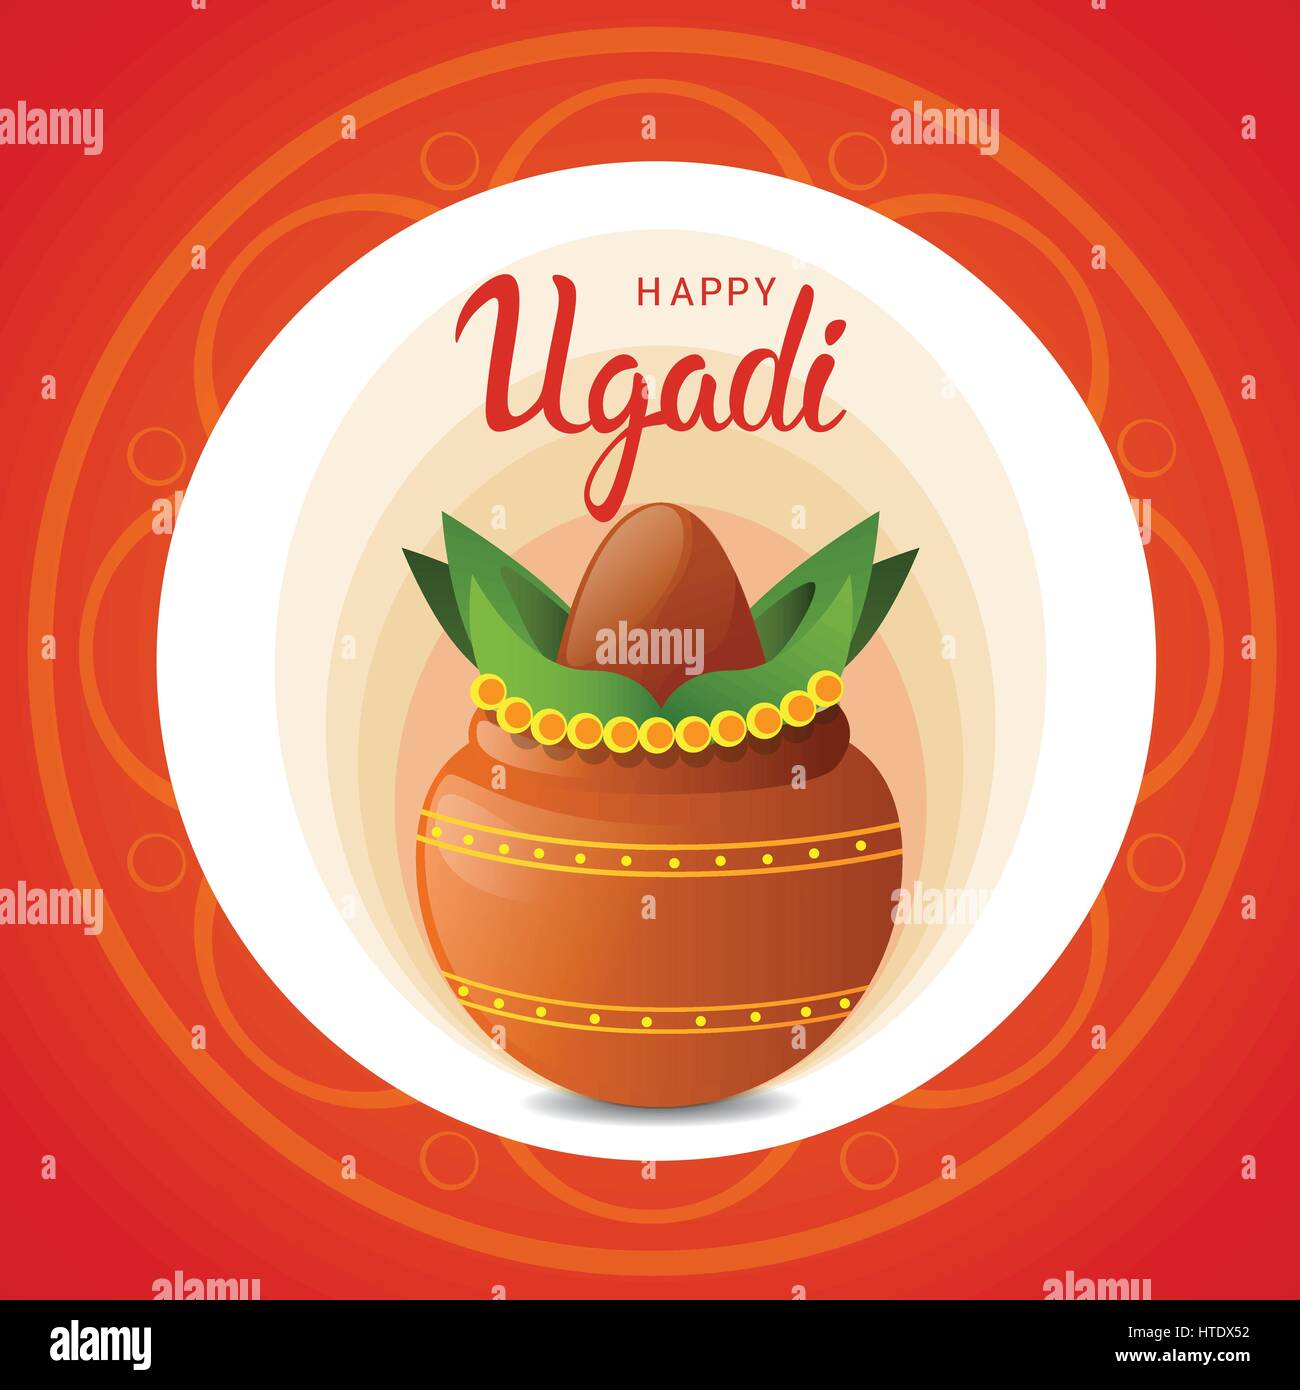 Happy Ugadi and Gudi Padwa Hindu New Year Greeting Card Holiday Pot With Coconut Stock Vector